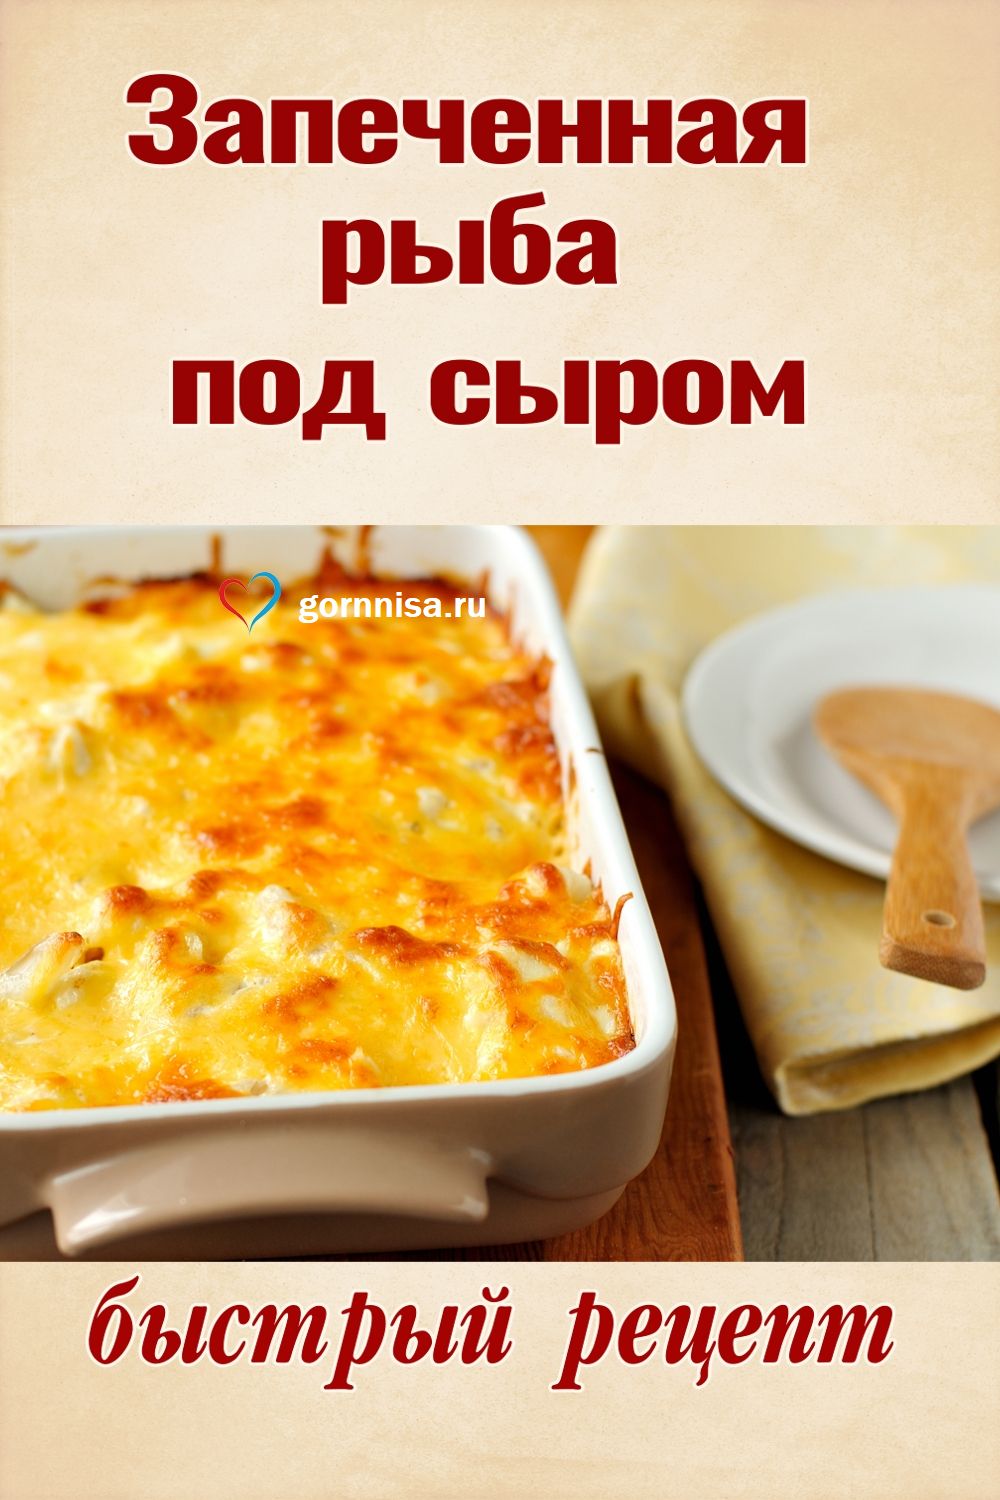 Запечённая рыба под сыром - быстрый рецепт https://gornnisa.ru